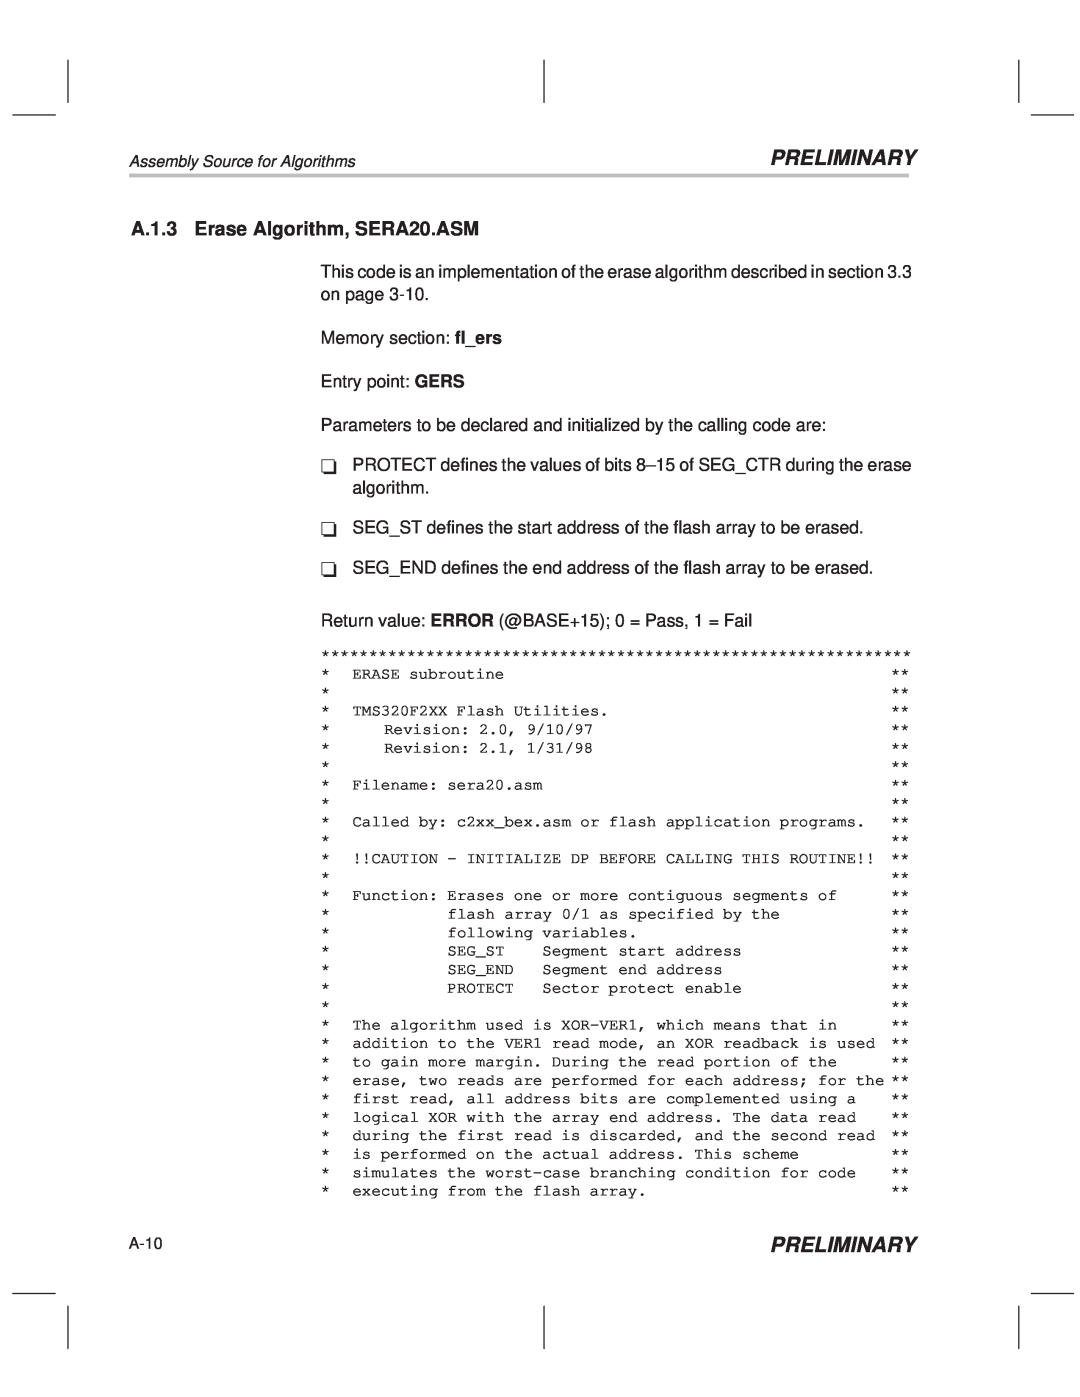 Texas Instruments TMS320F20x/F24x DSP manual A.1.3 Erase Algorithm, SERA20.ASM, Preliminary, A-10 